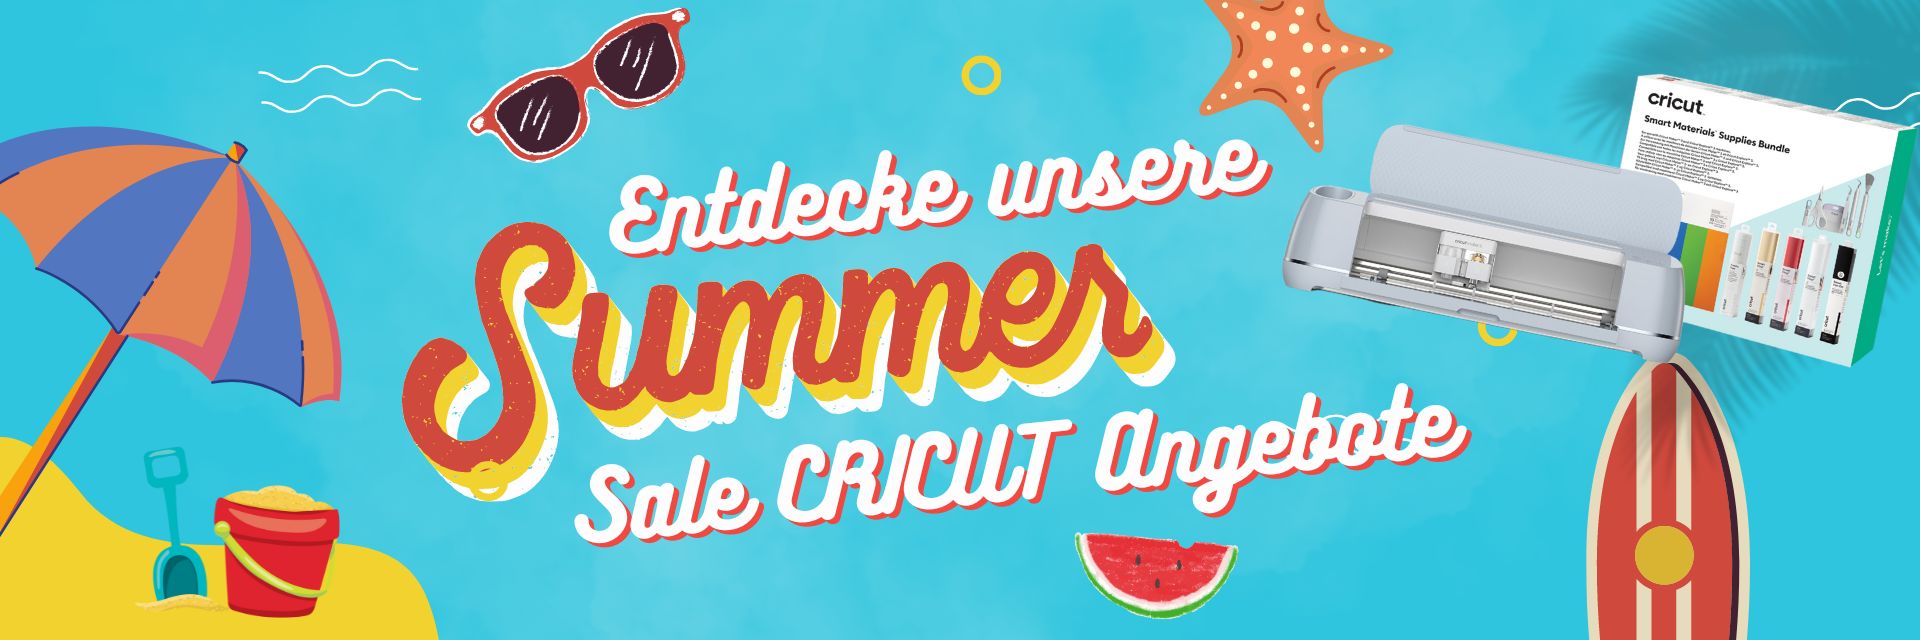 Cricut Summer Sale